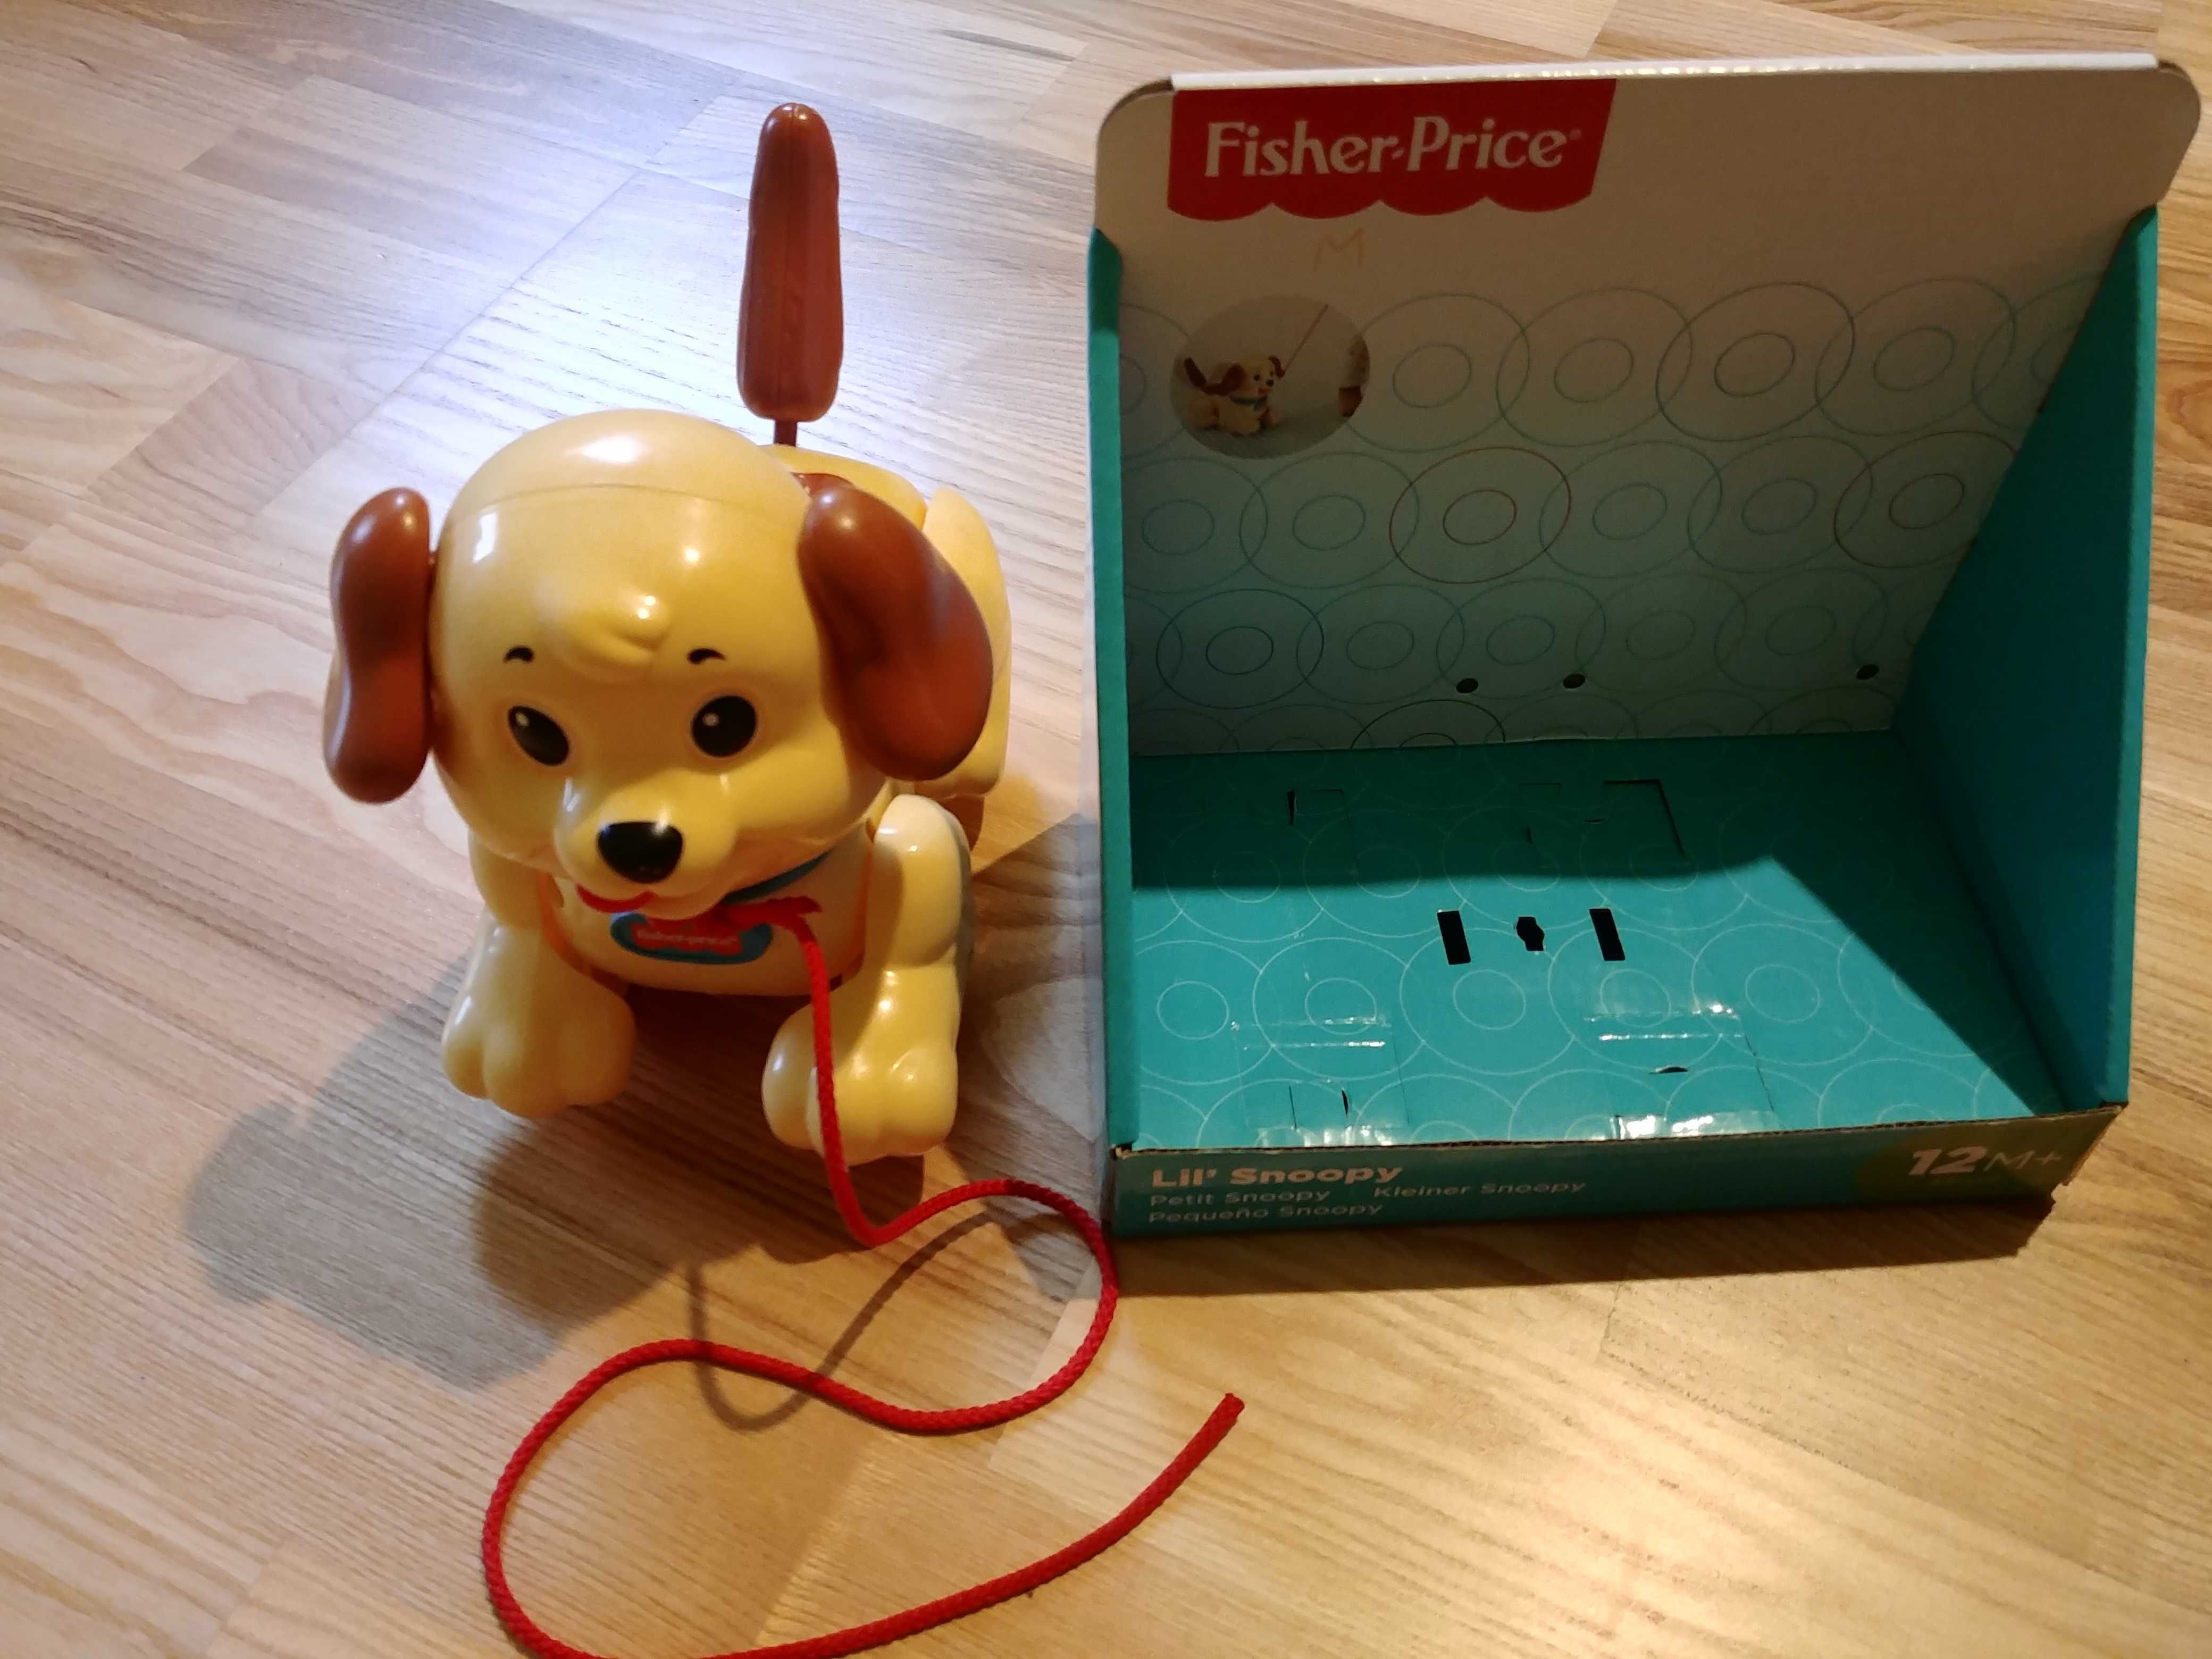 Fisher Price zestaw zabawek: piesek Snoopy, motylek, pelikan, telefon